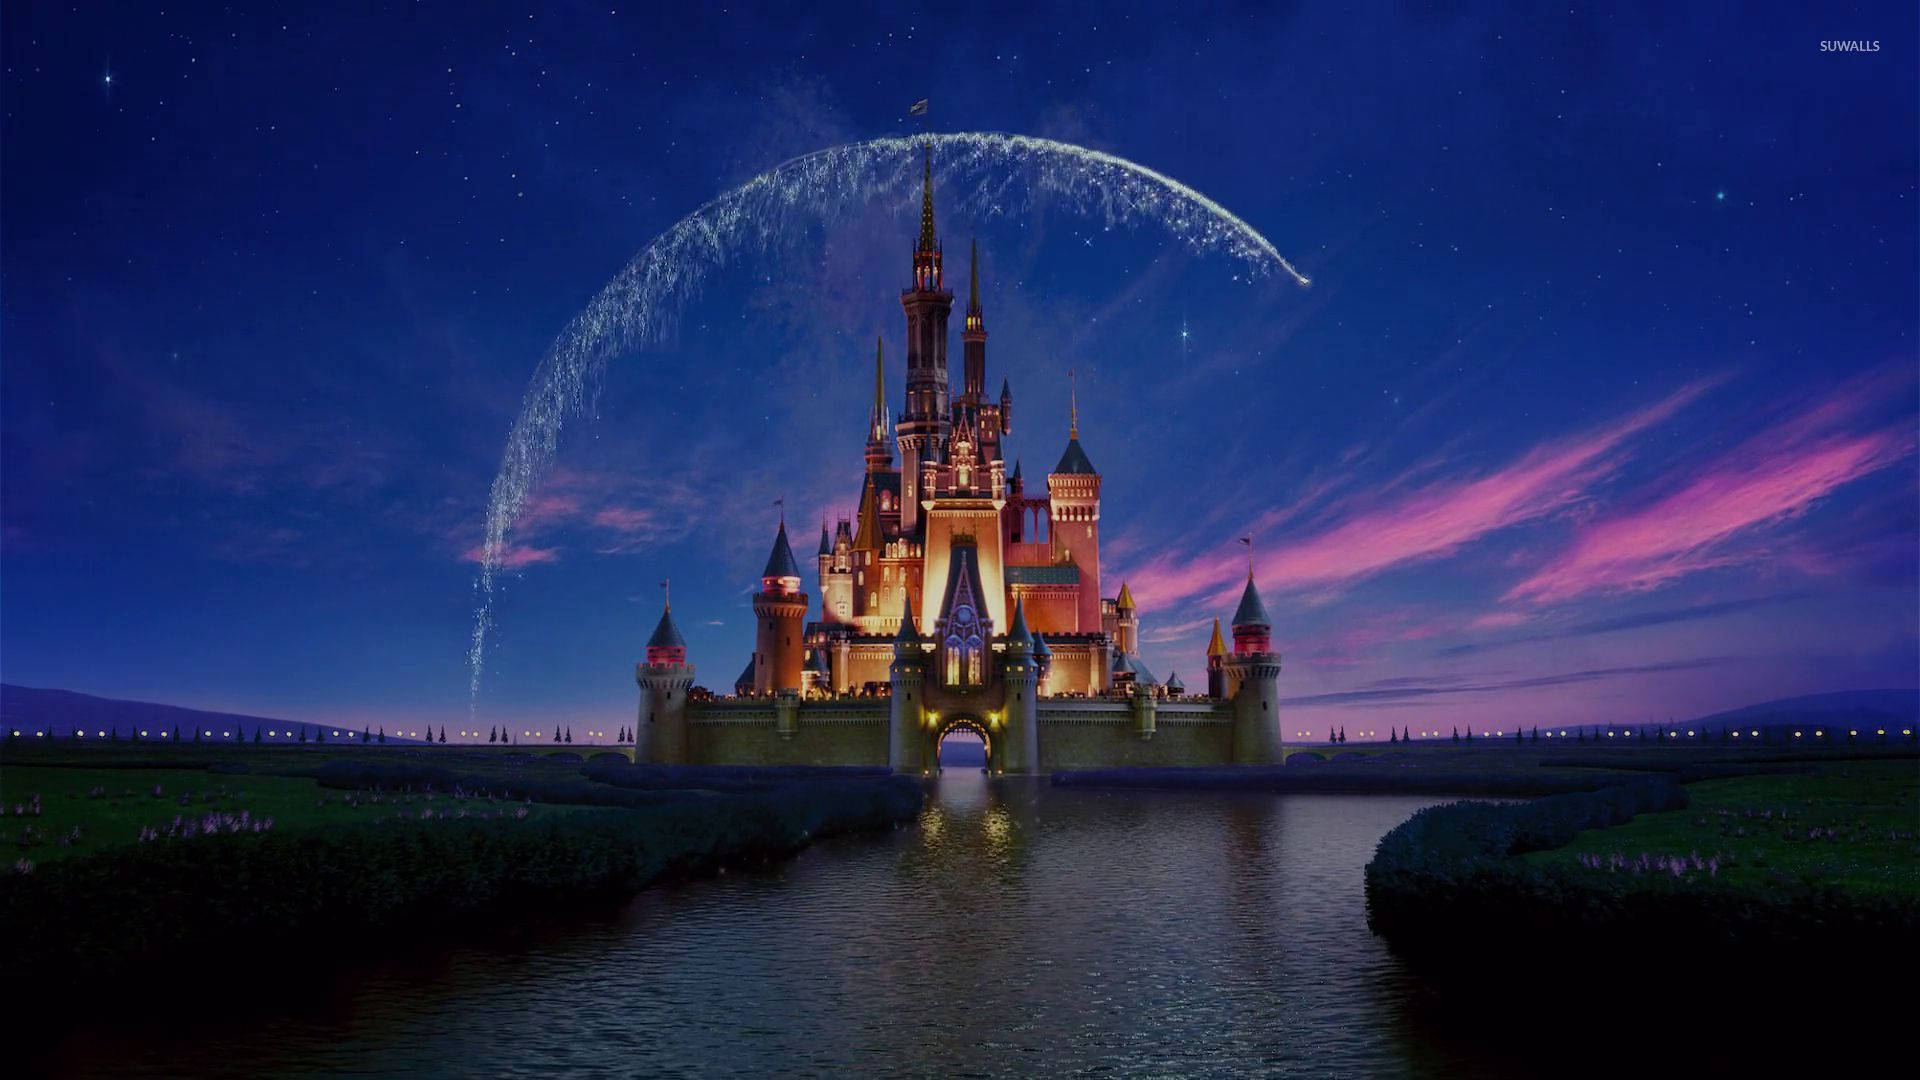 Glowing Disneyland Castle At Night Wallpaper